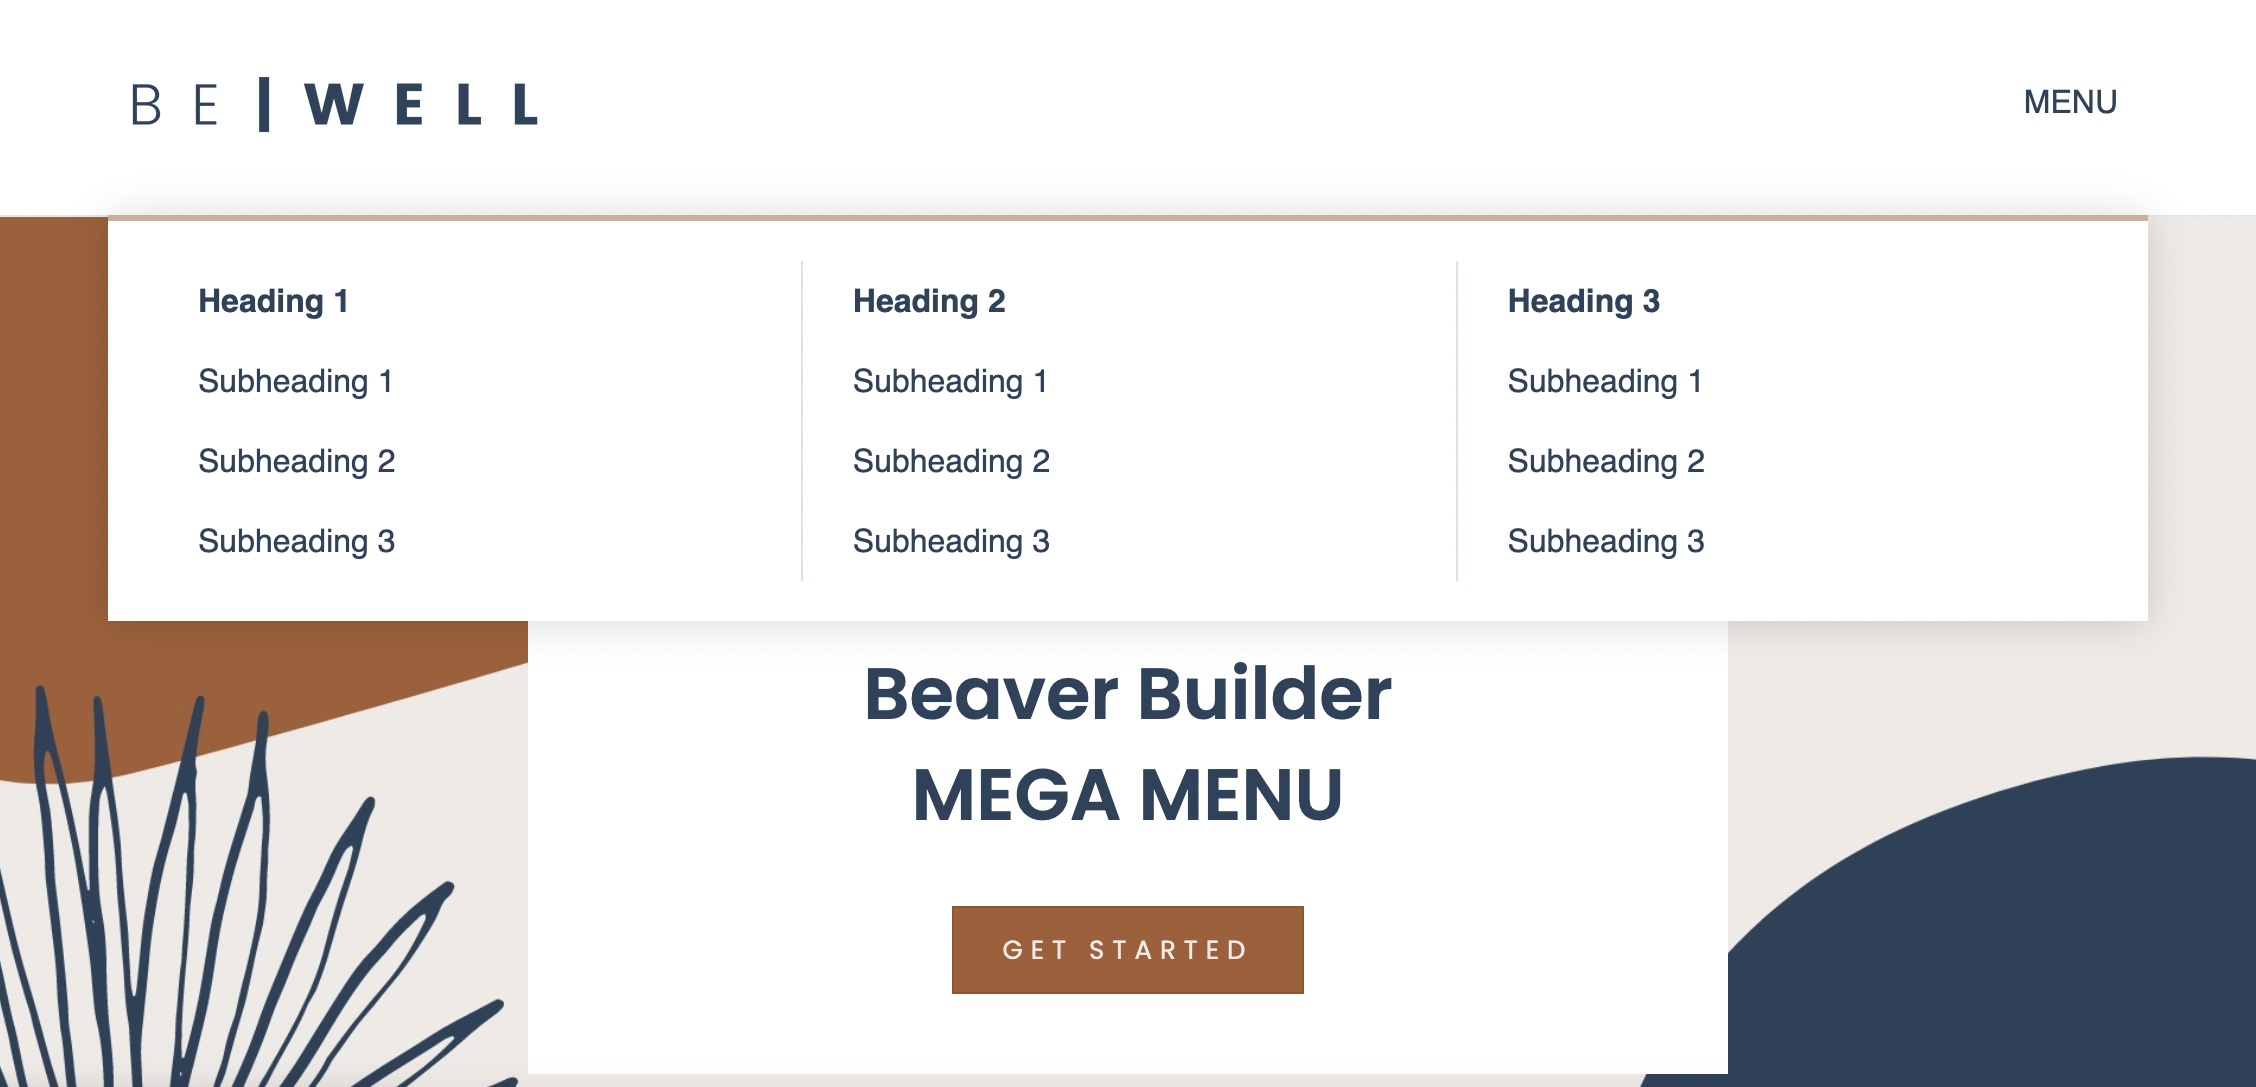 Beaver Builder theme mega menu example